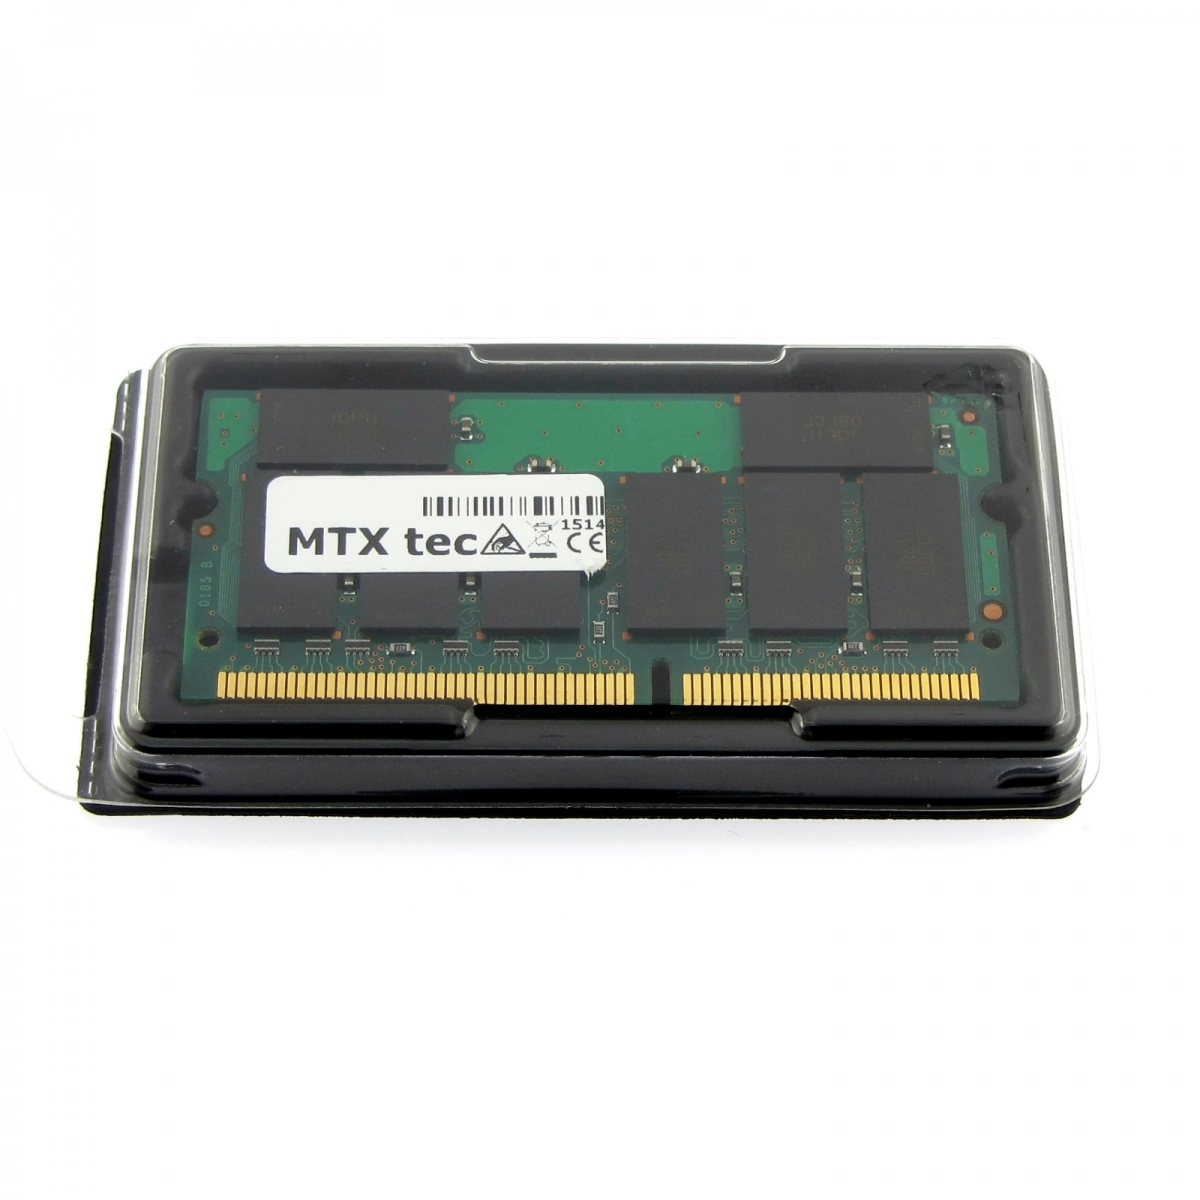 MTXtec Arbeitsspeicher ACER 91.42R29.001, 512 MB RAM